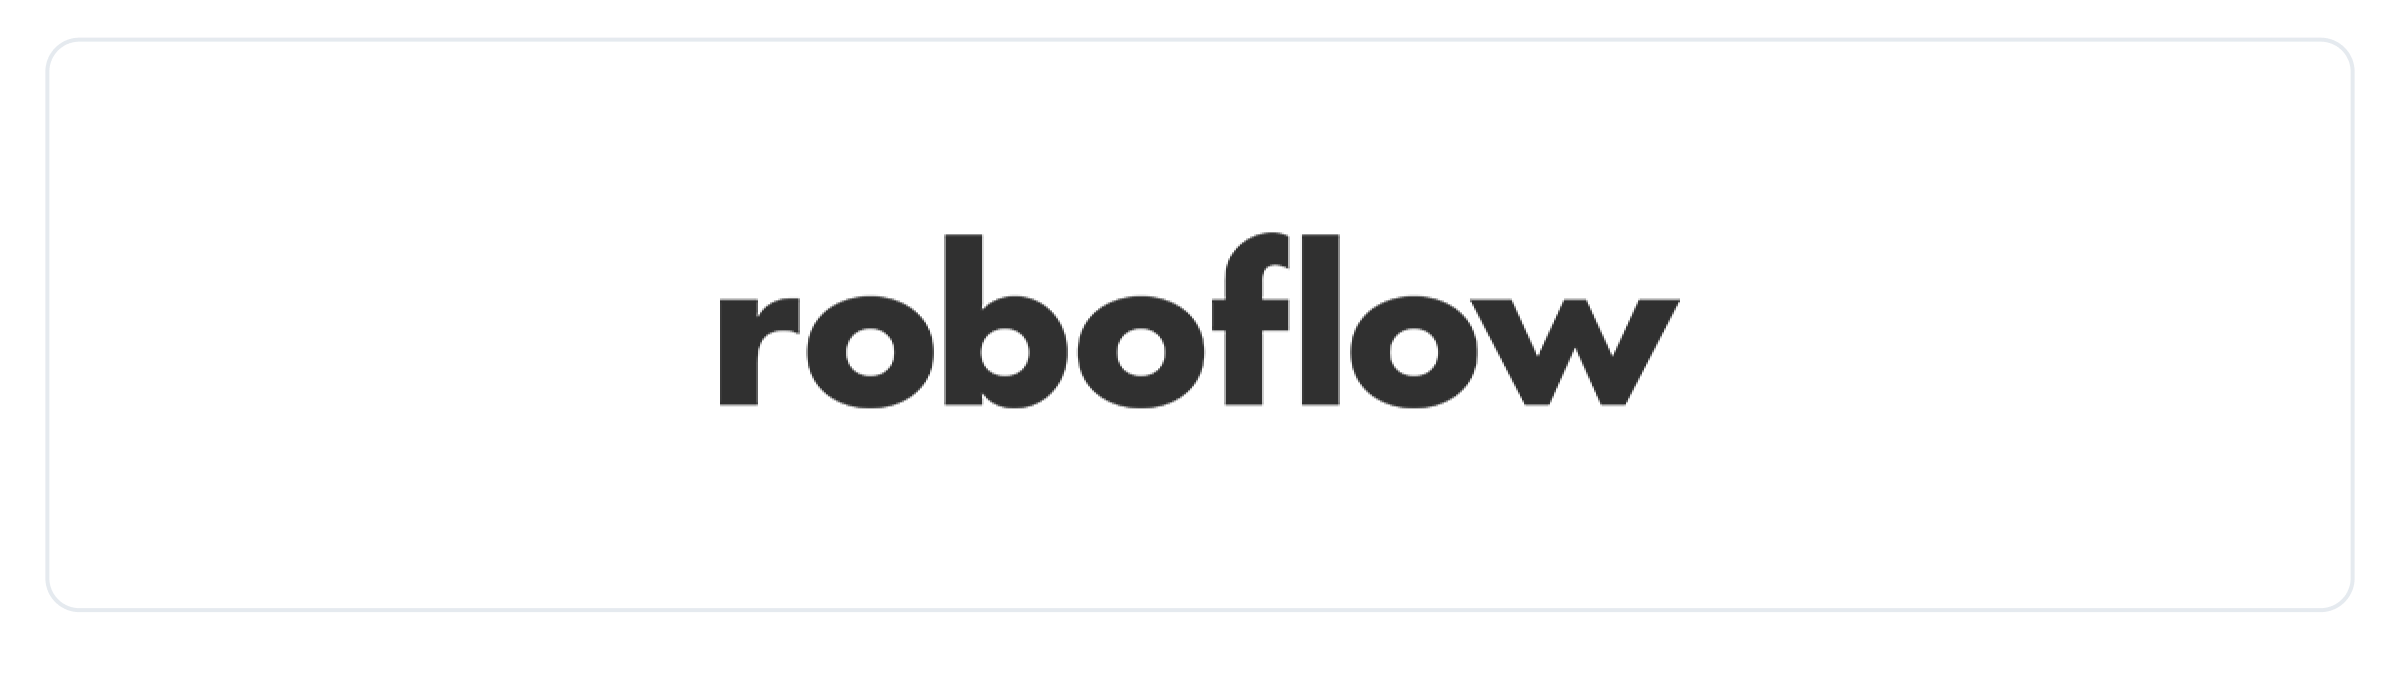 Roboflow logo.